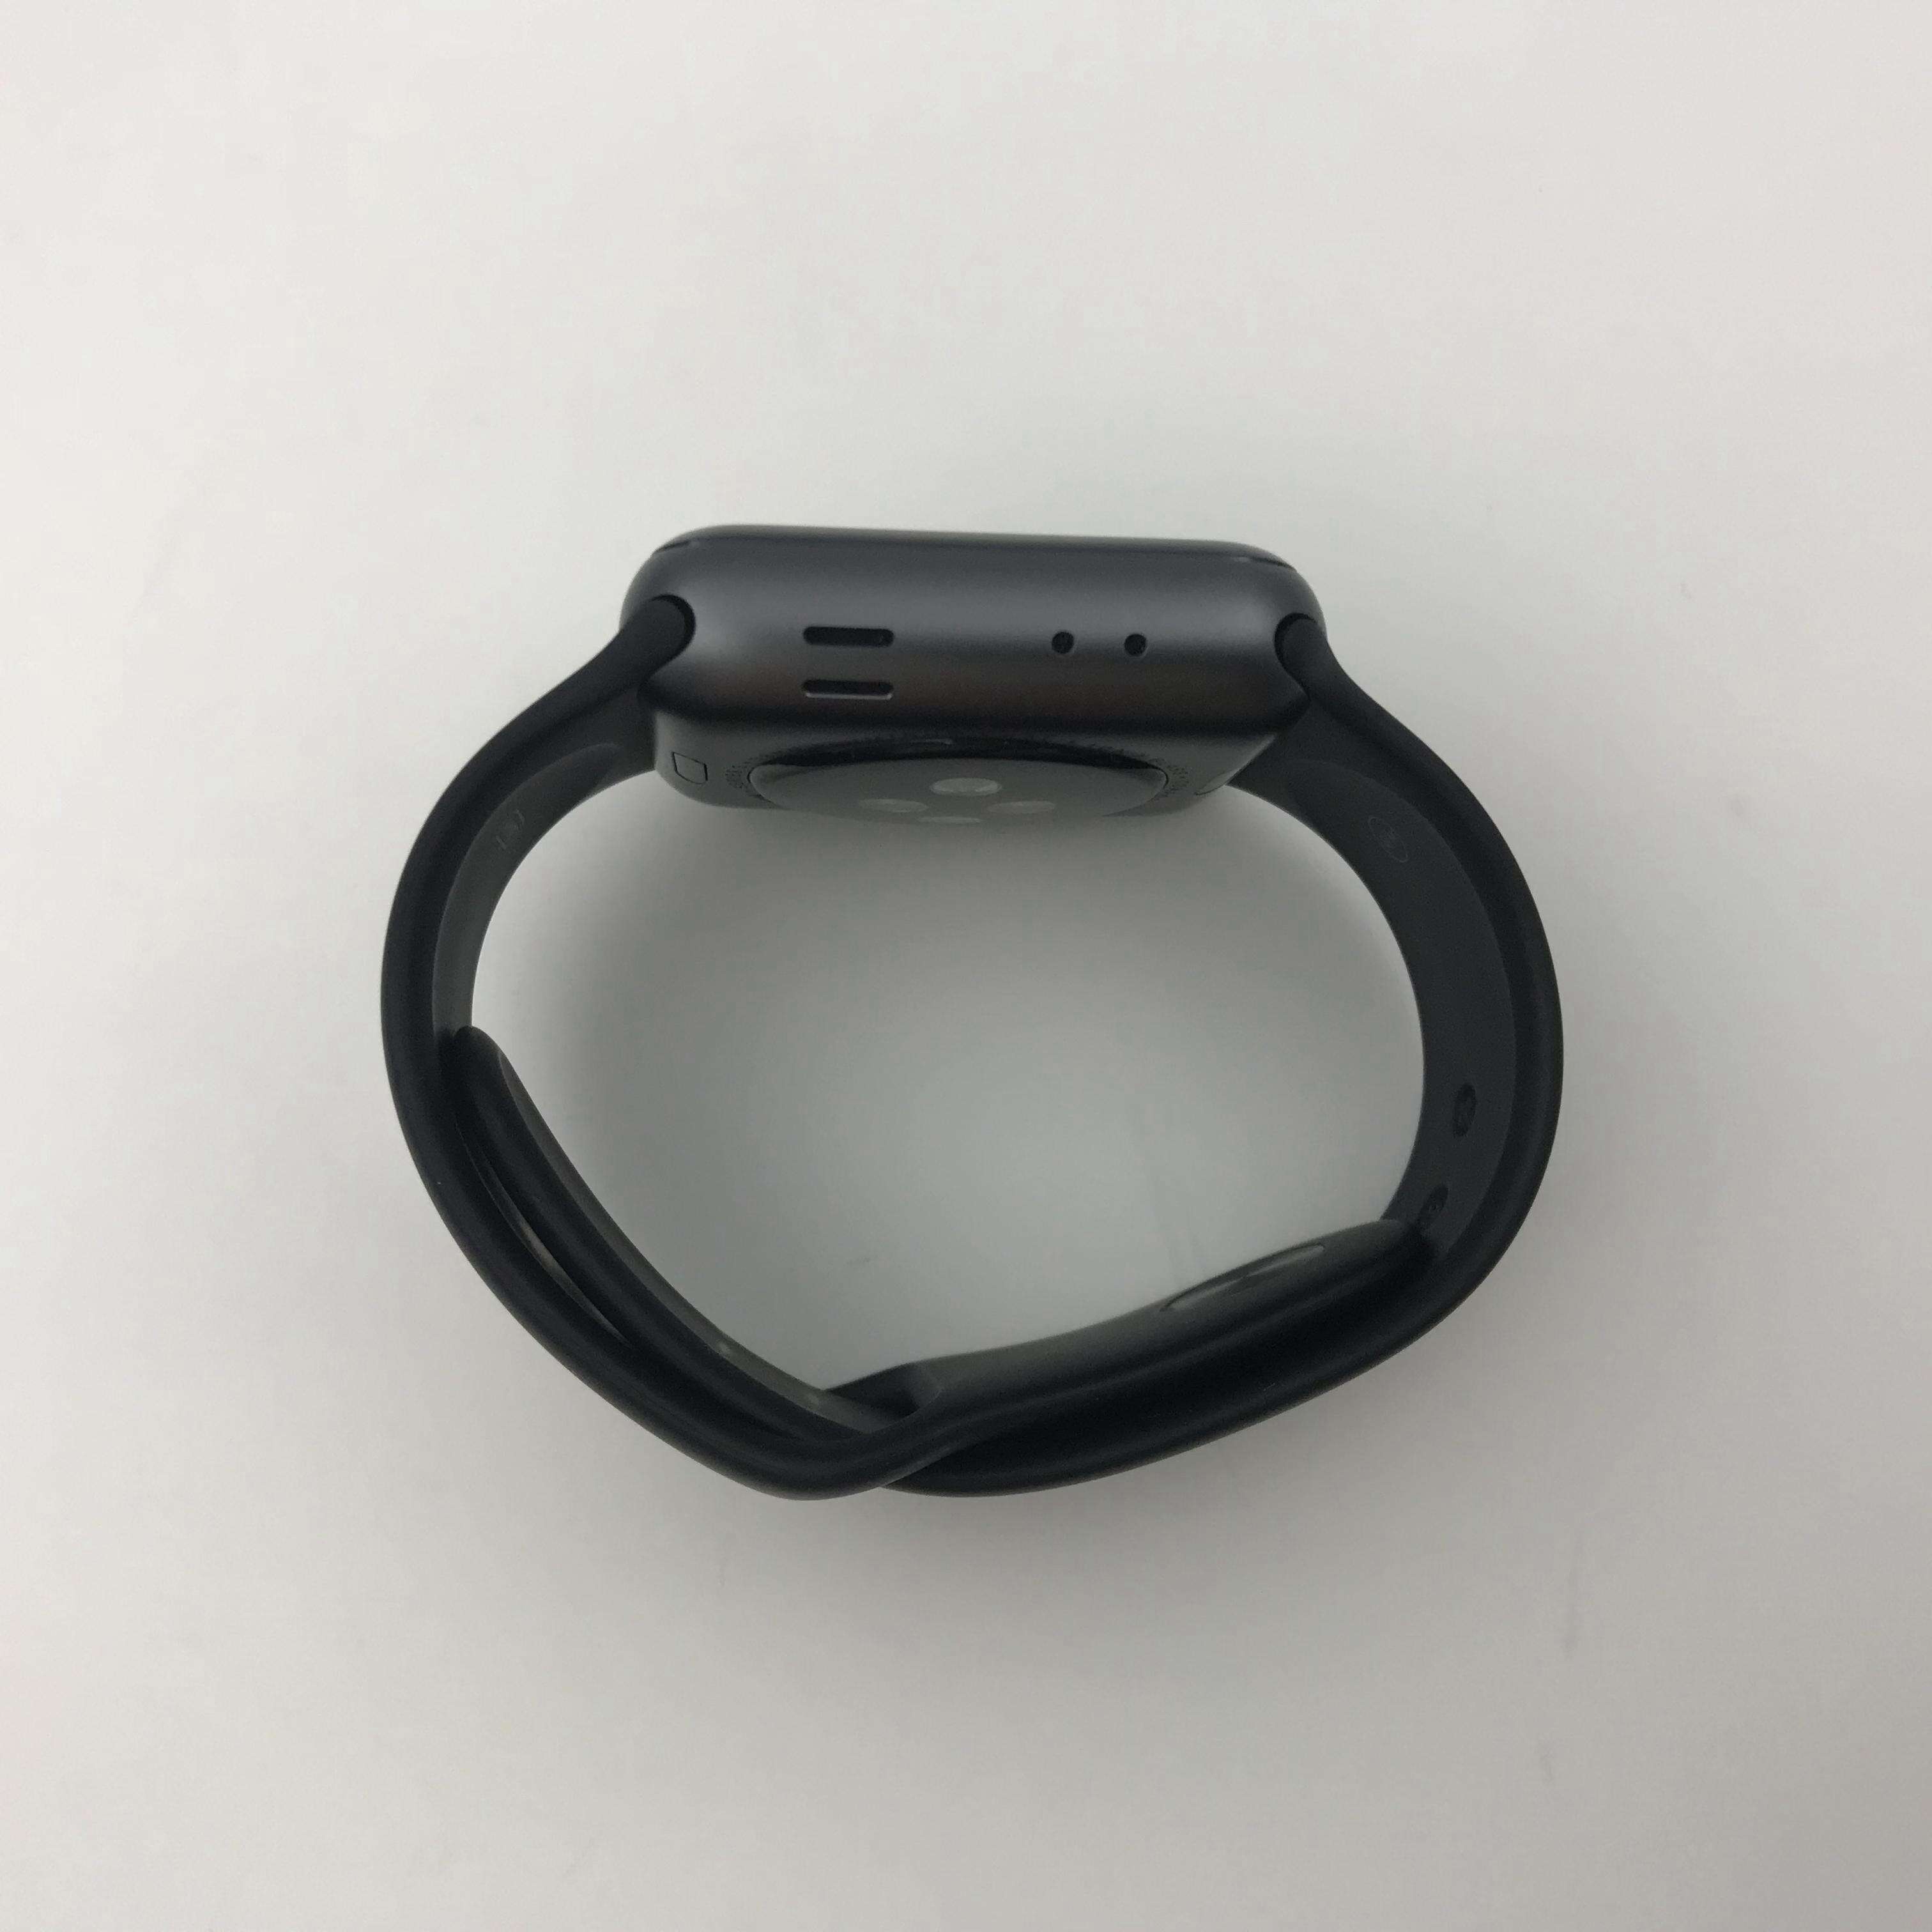 Apple Watch Series 3 铝金属表壳 38MM 国行GPS版